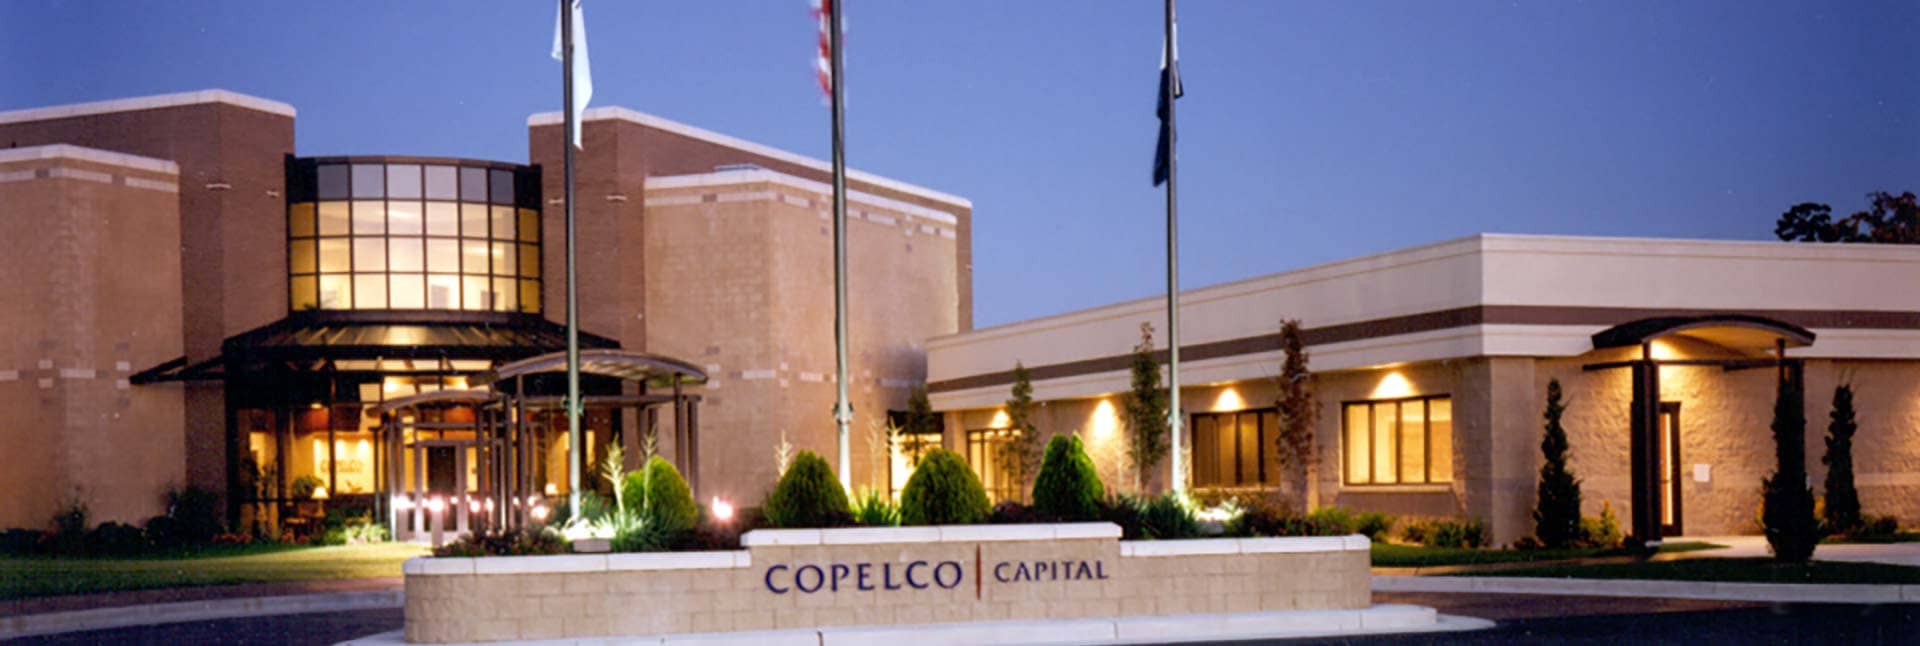 COPELCO Capital Building